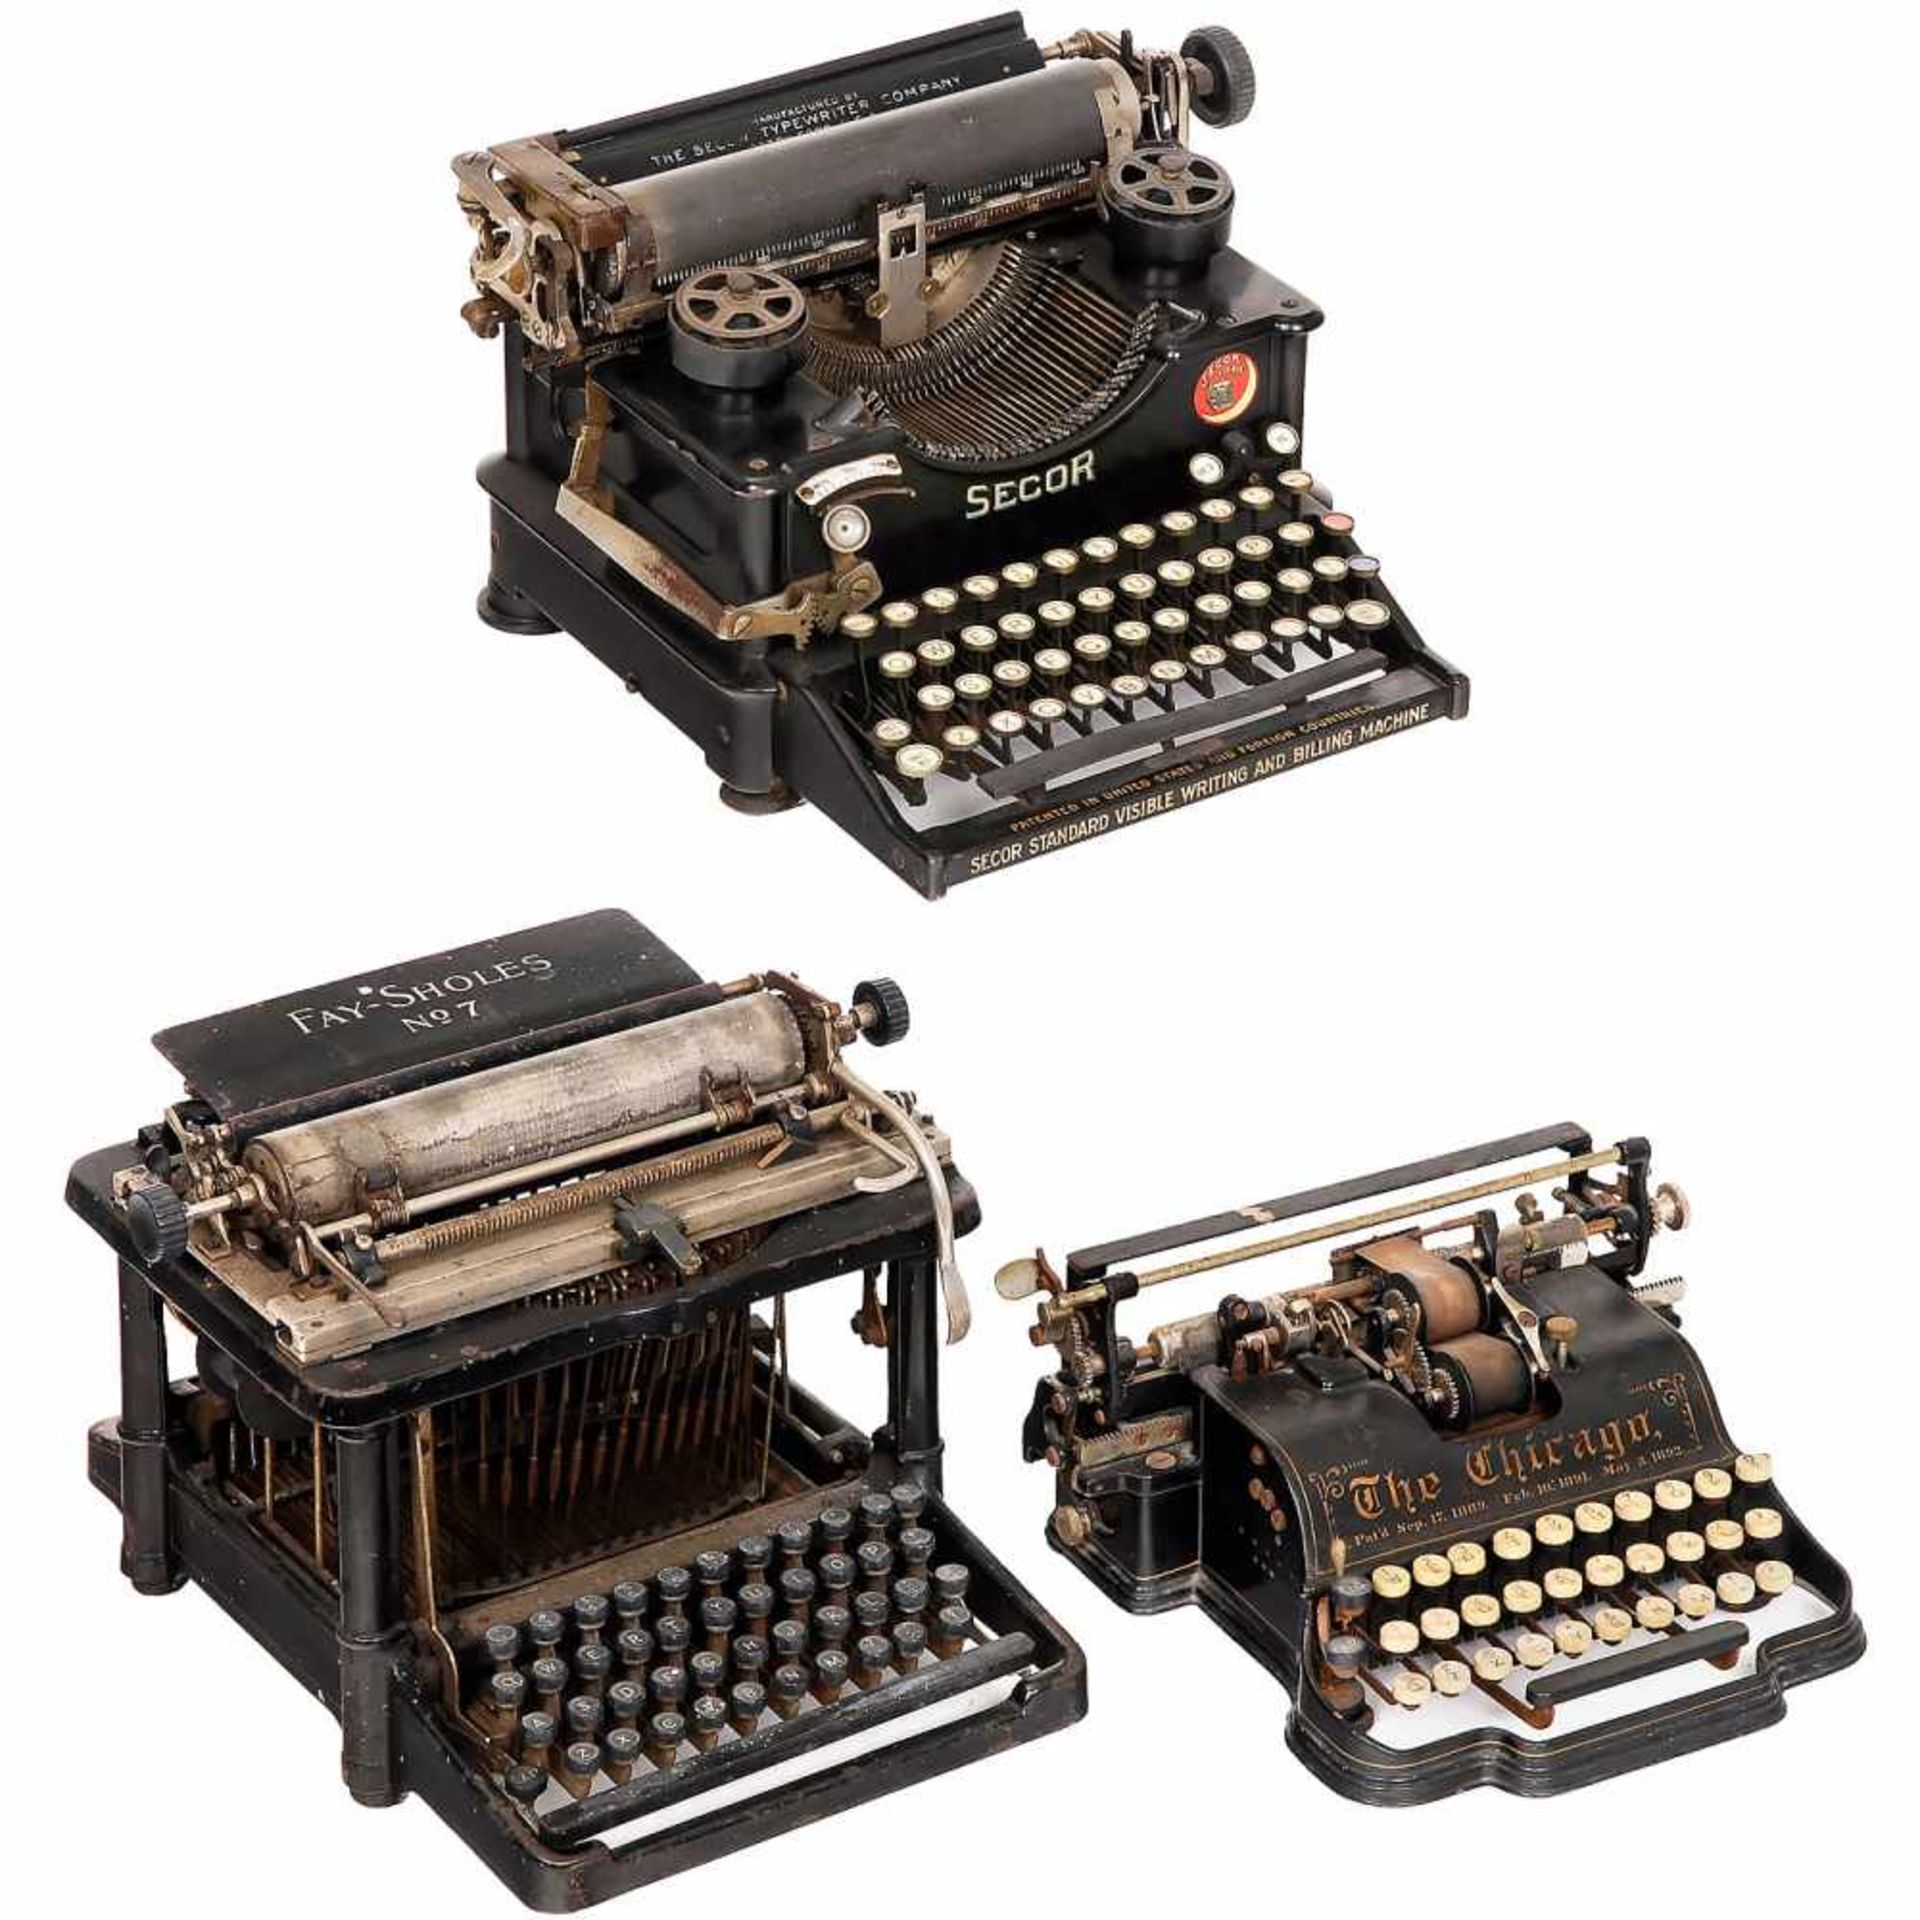 3 American Typewriters1) The Chicago typewriter, 1889, very desirable American typesleeve machine